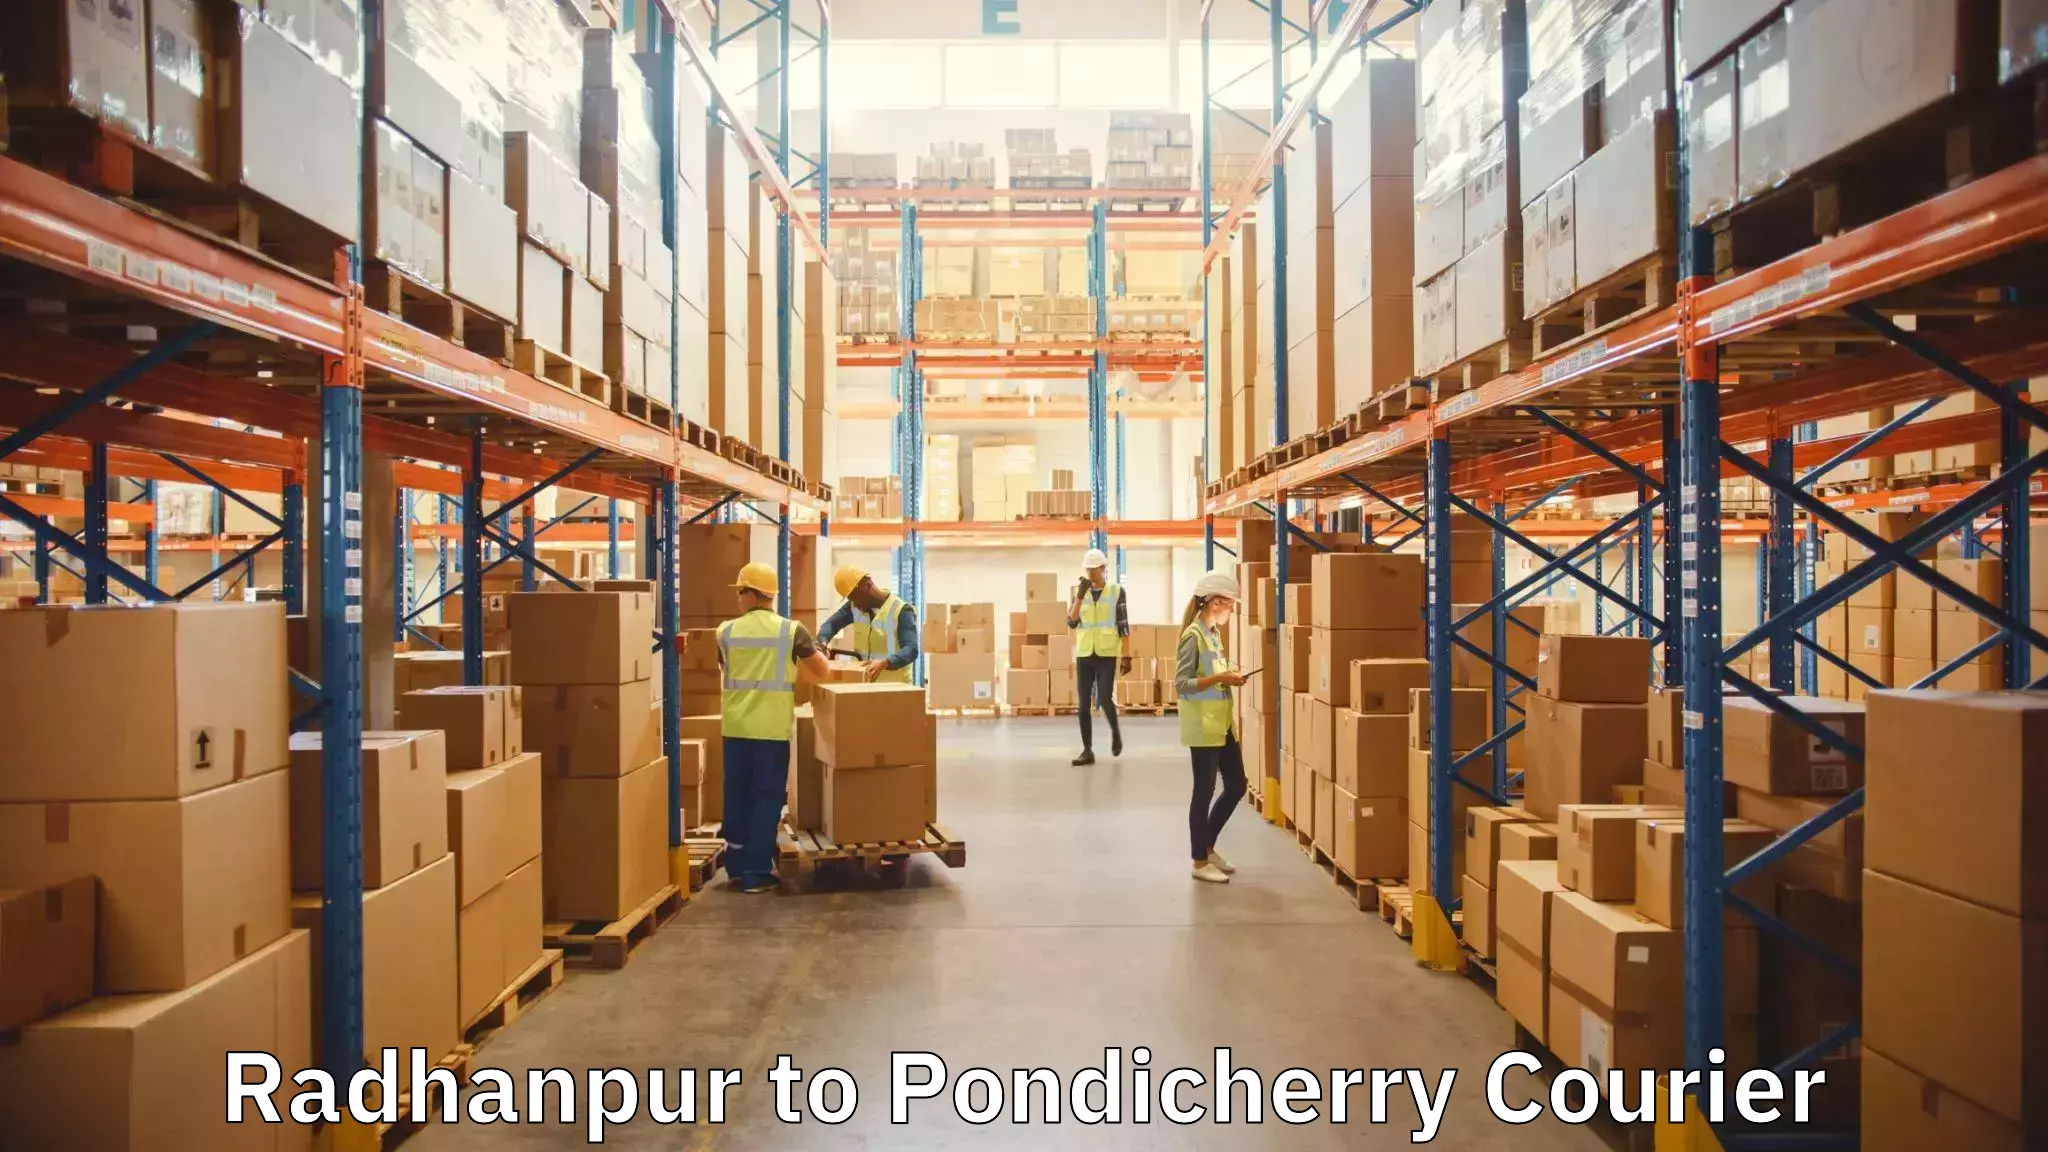 Professional moving company Radhanpur to Pondicherry